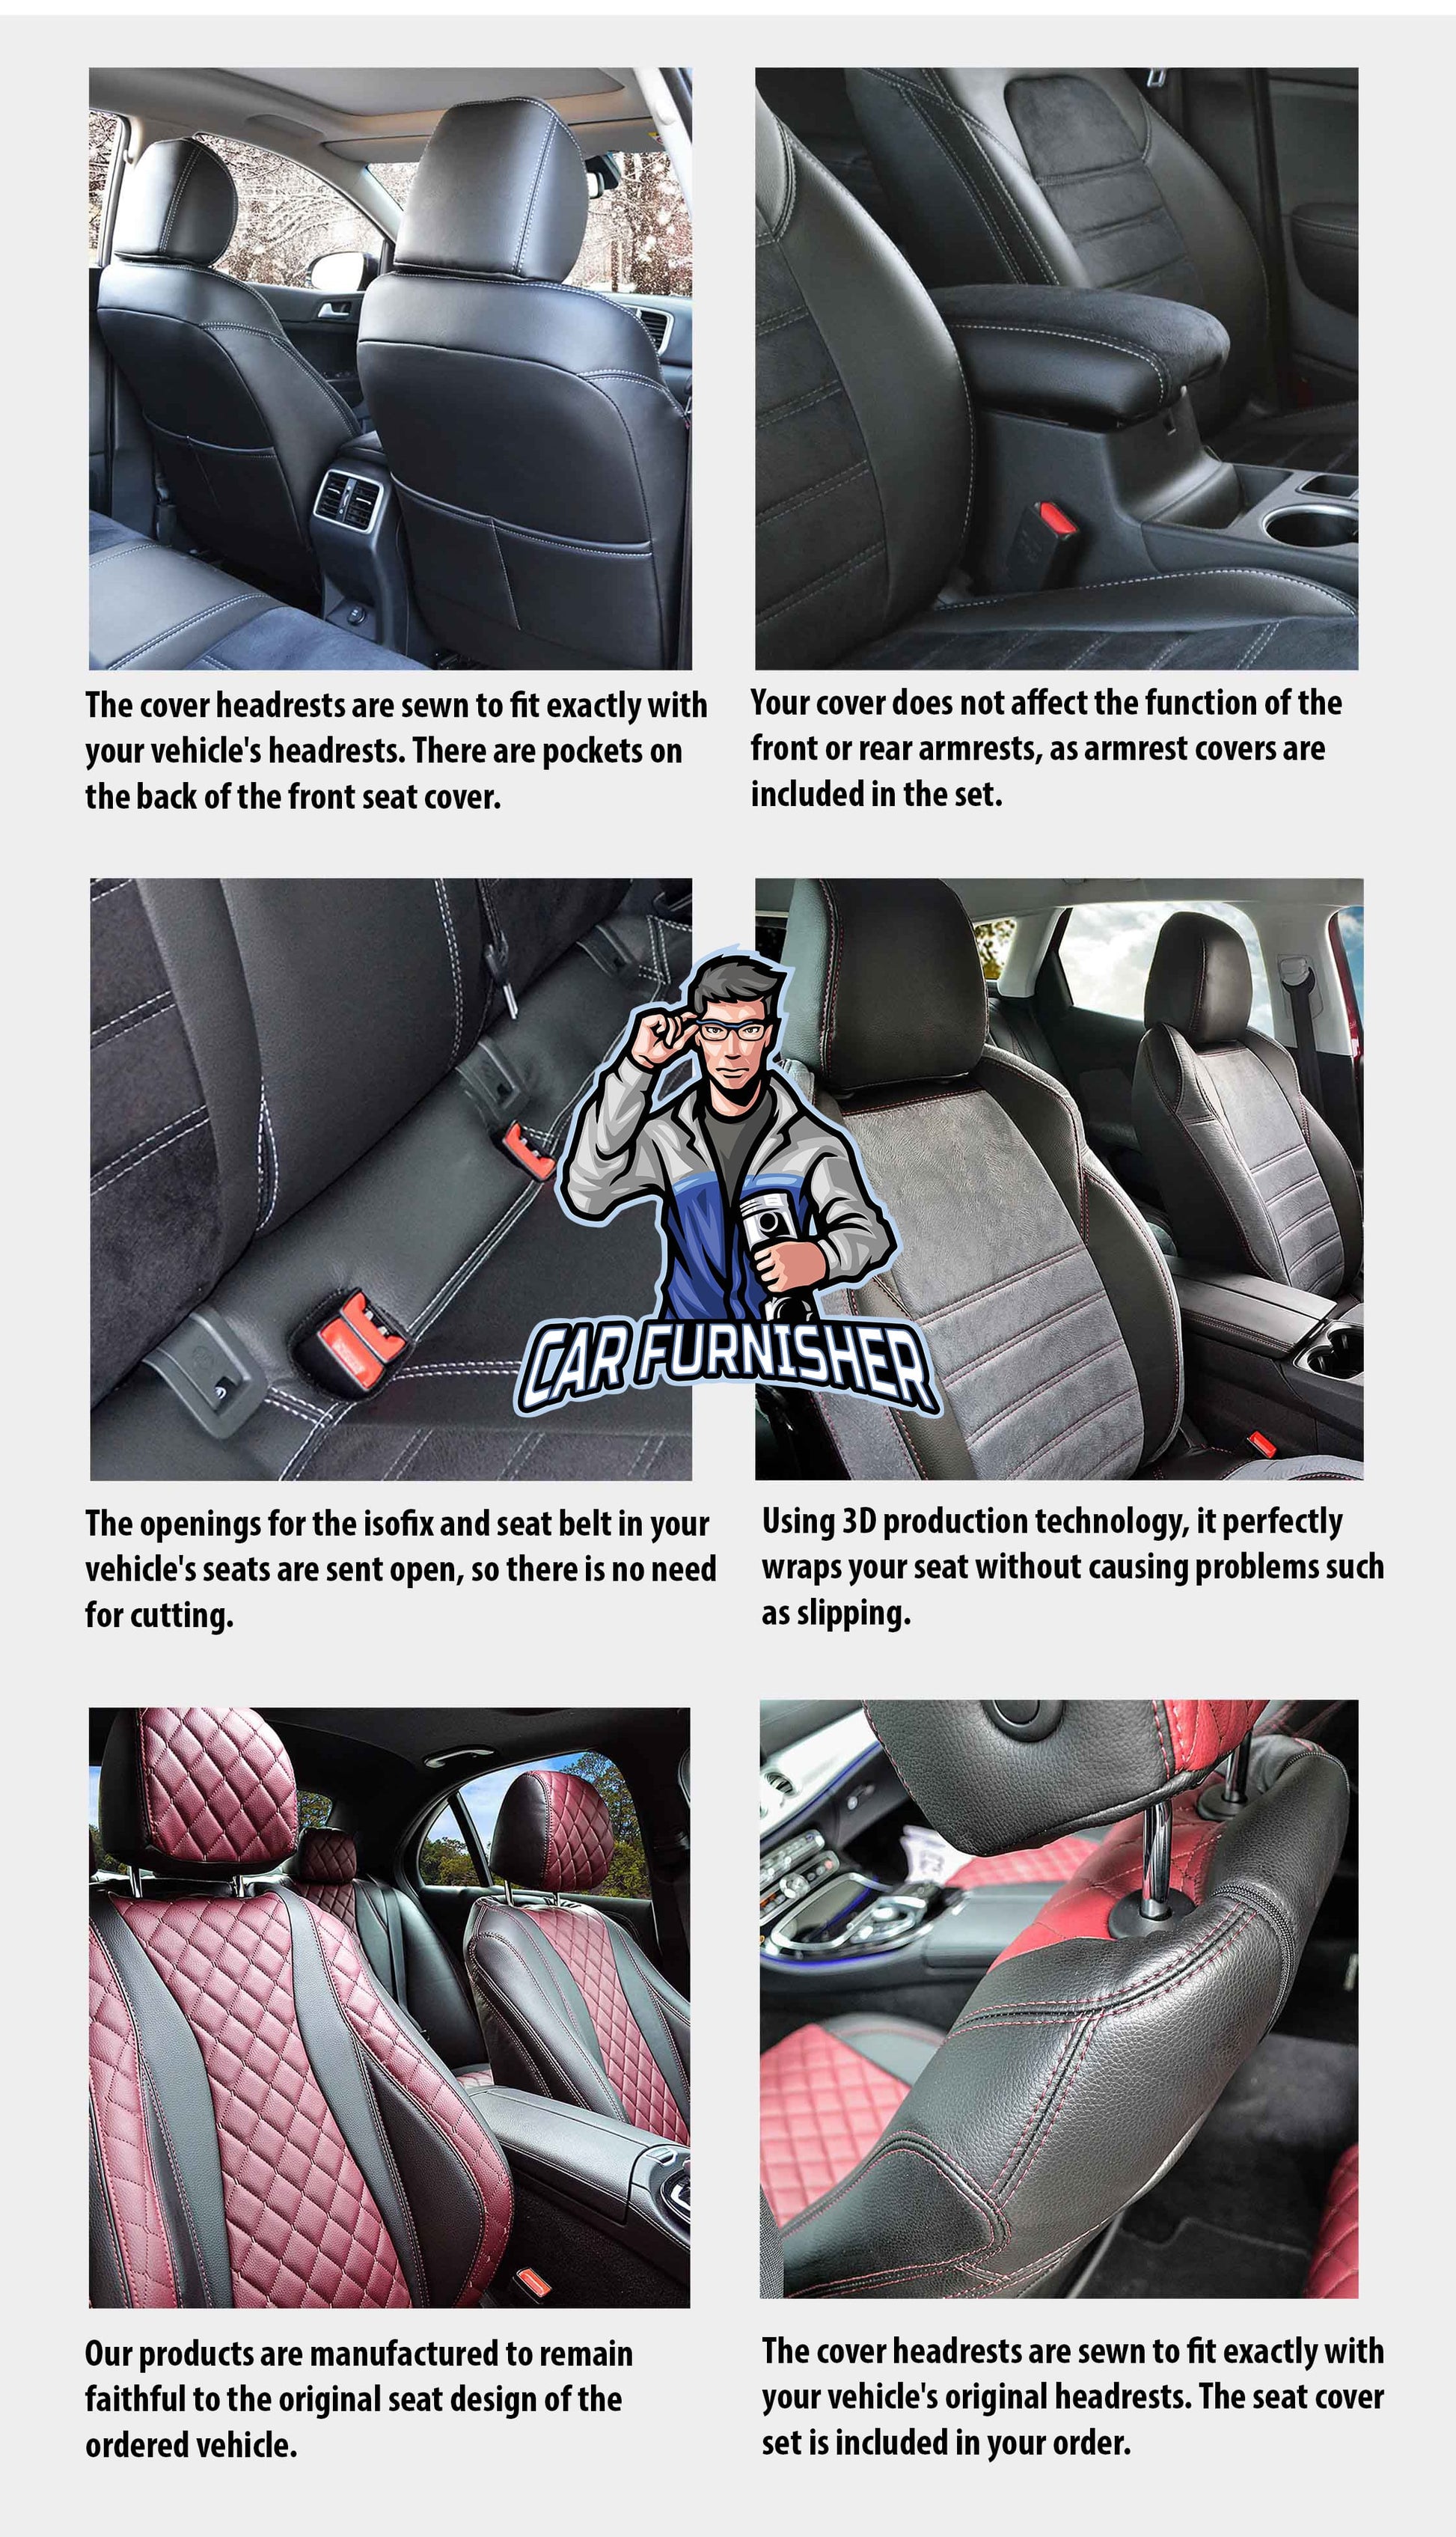 Peugeot Expert Seat Covers Paris Leather & Jacquard Design Beige Leather & Jacquard Fabric